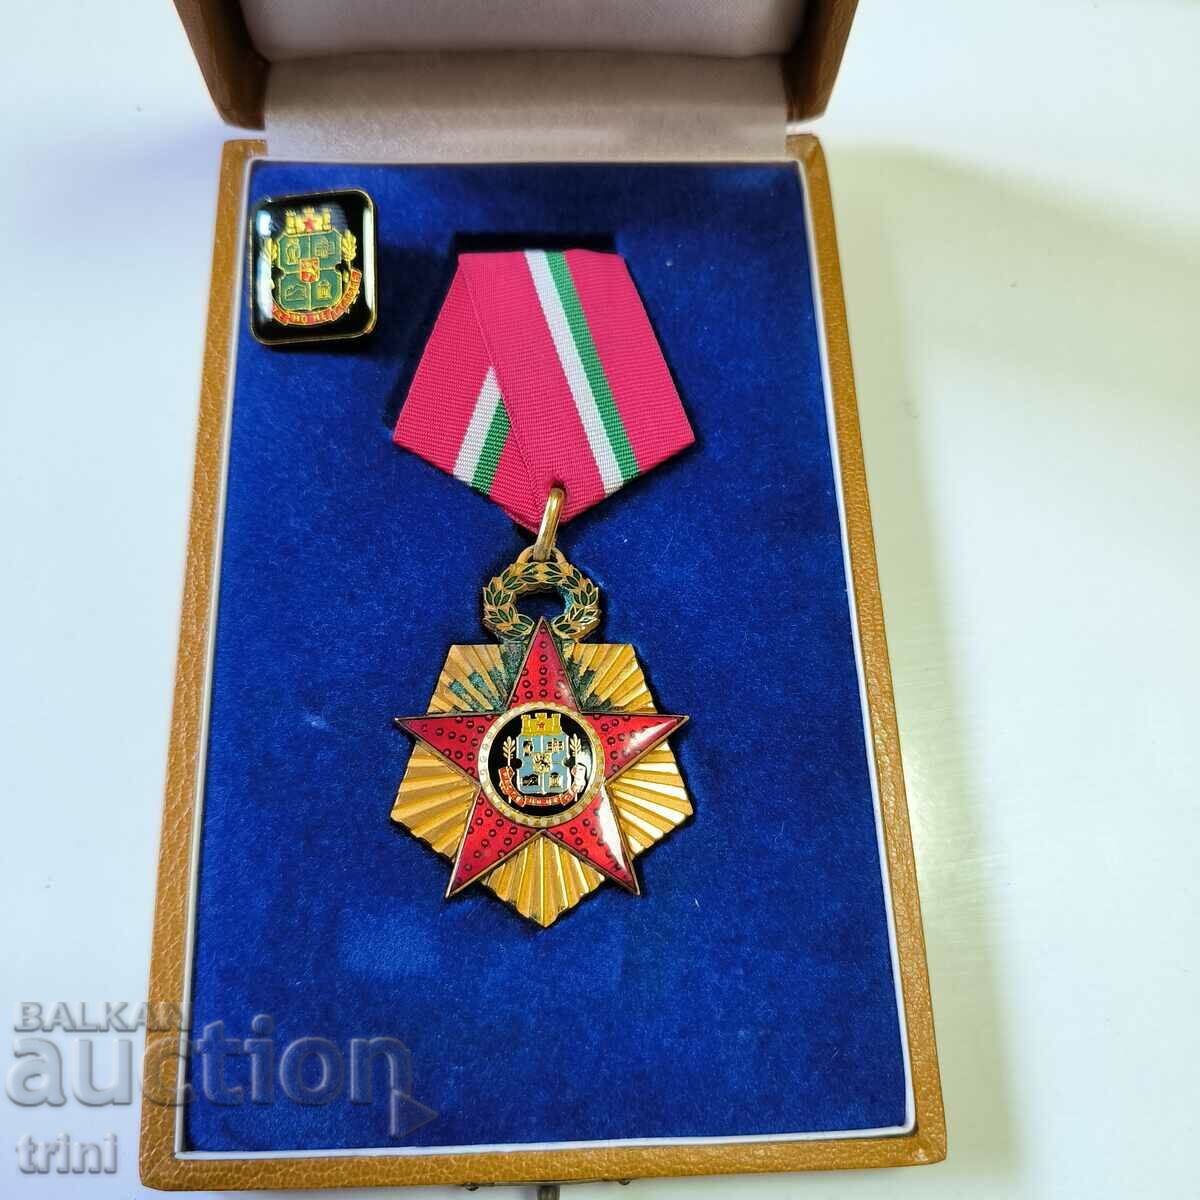 Медал  СОФИЯ 100 години Столица на България 1979 плюс знак